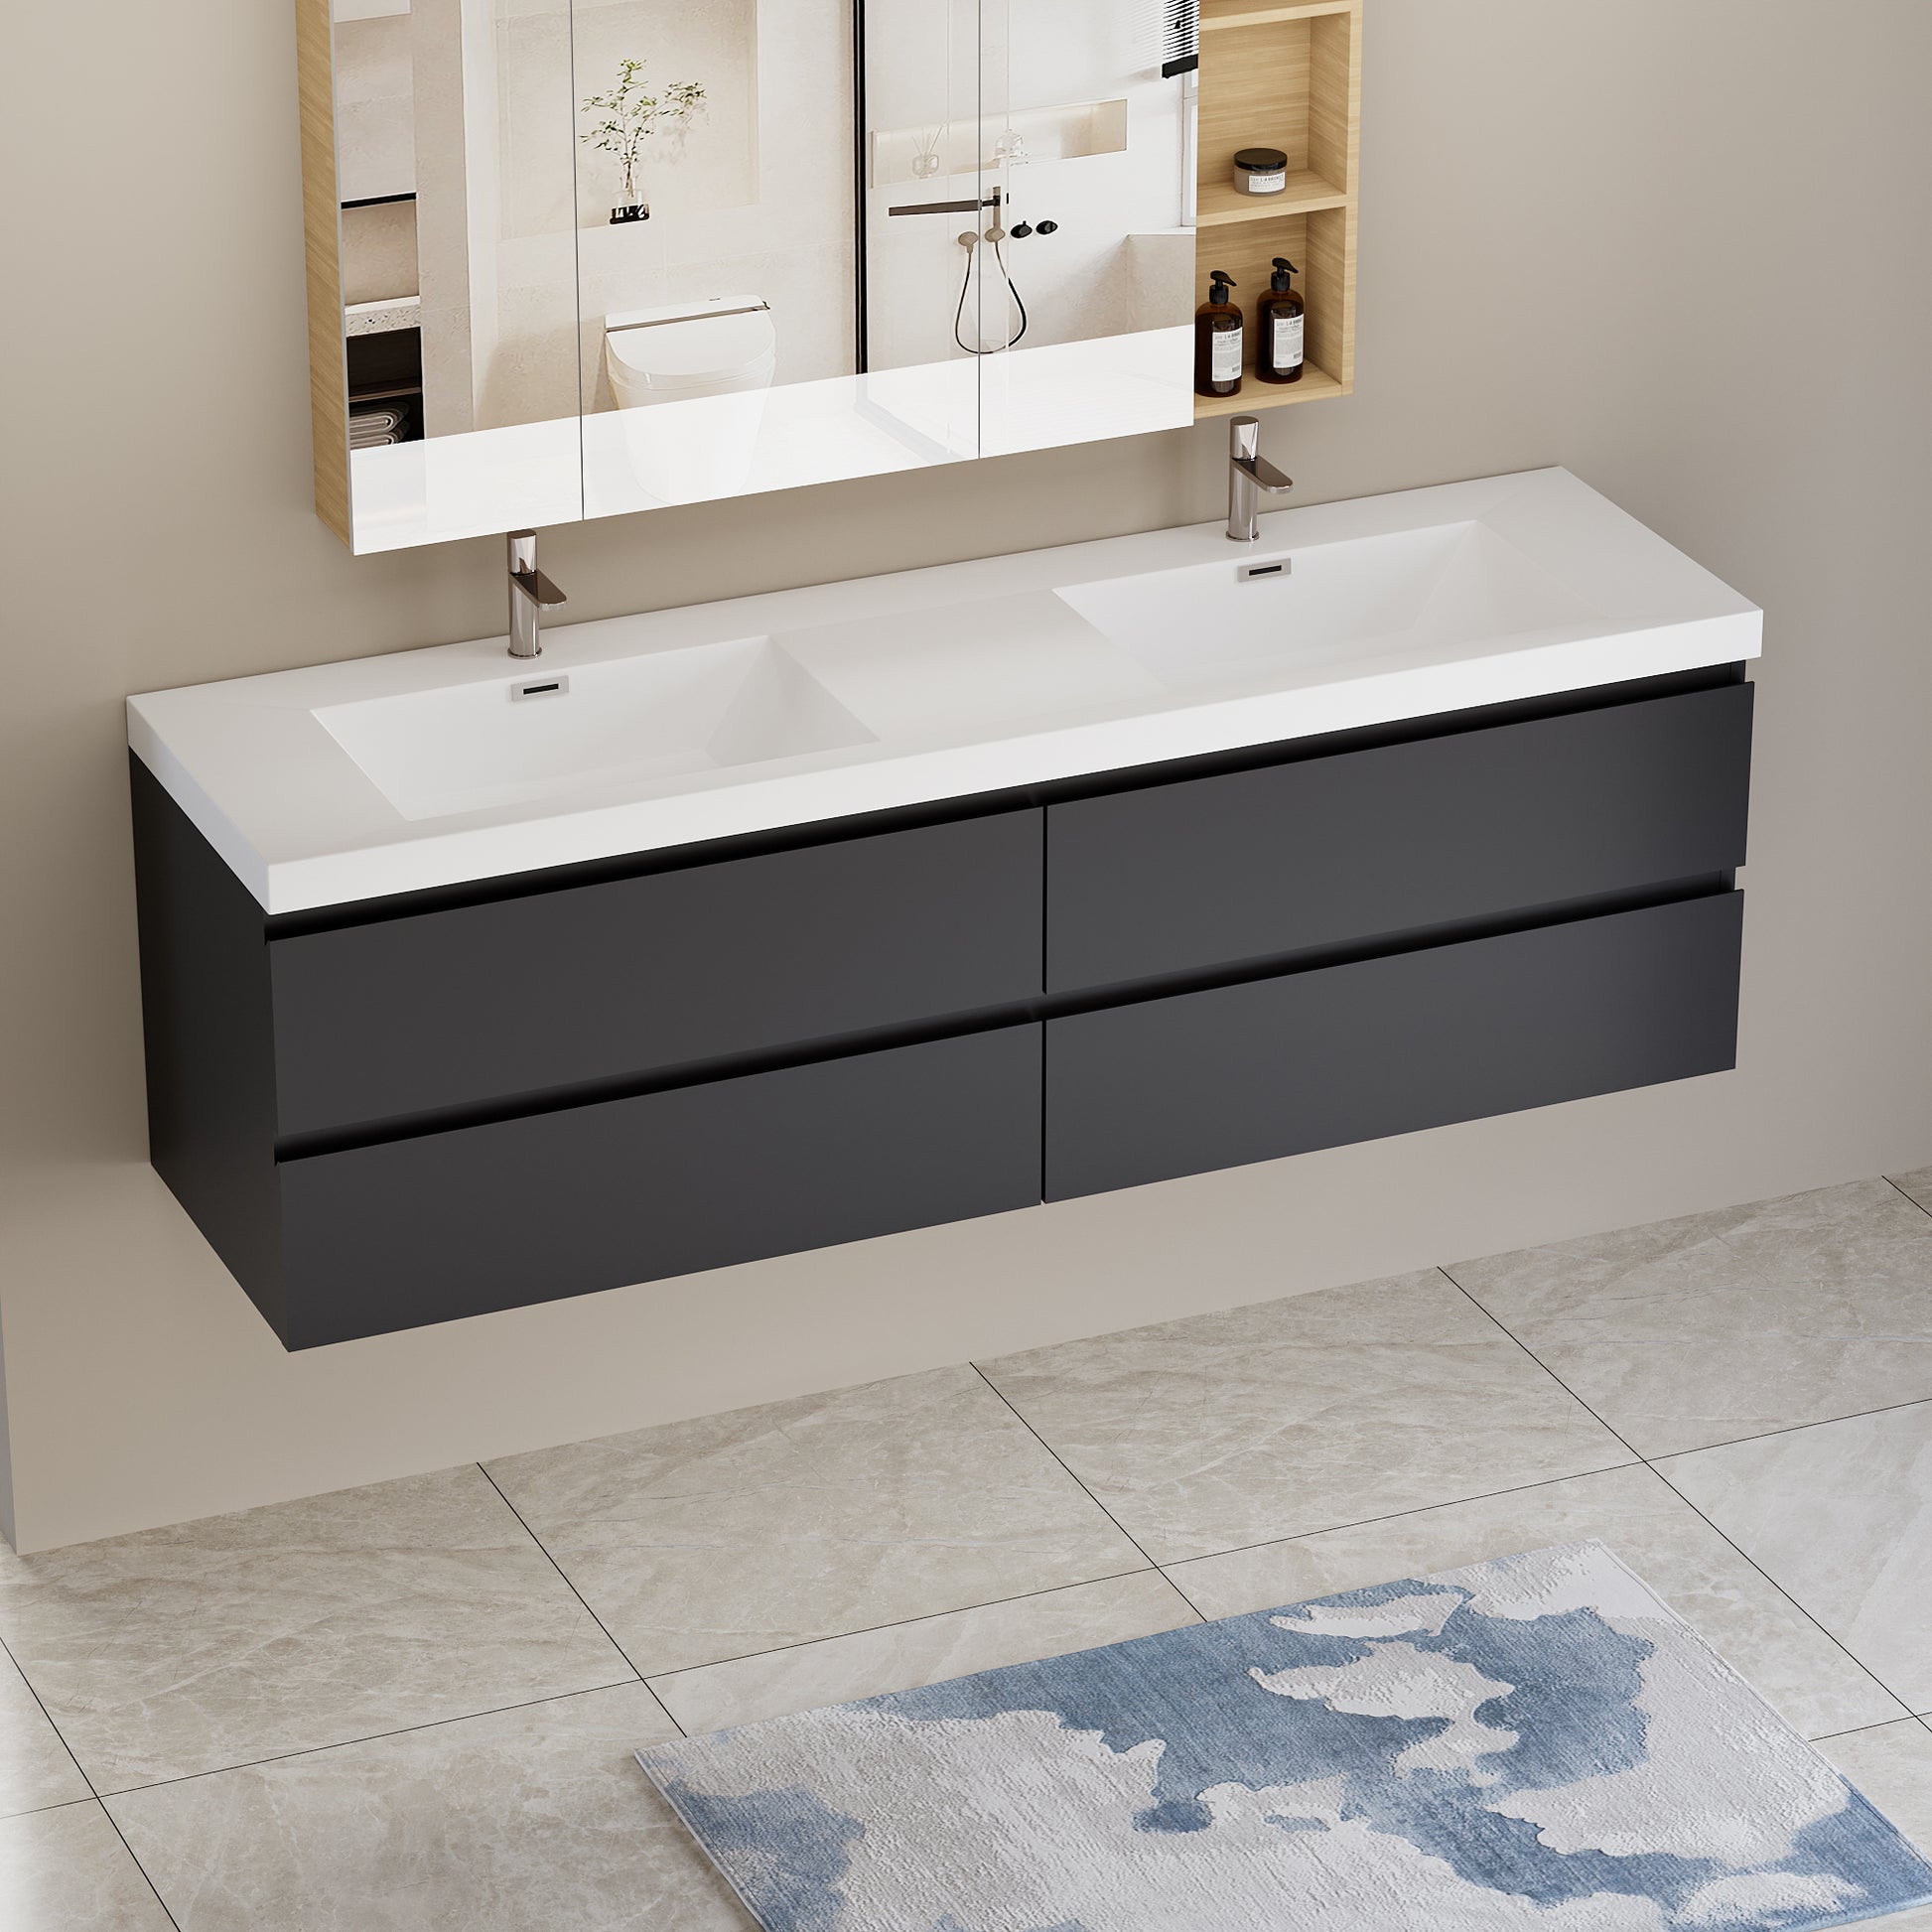 72" Floating Bathroom Vanity with Sink, Modern Wall 4+-black-bathroom-wall mounted-mdf